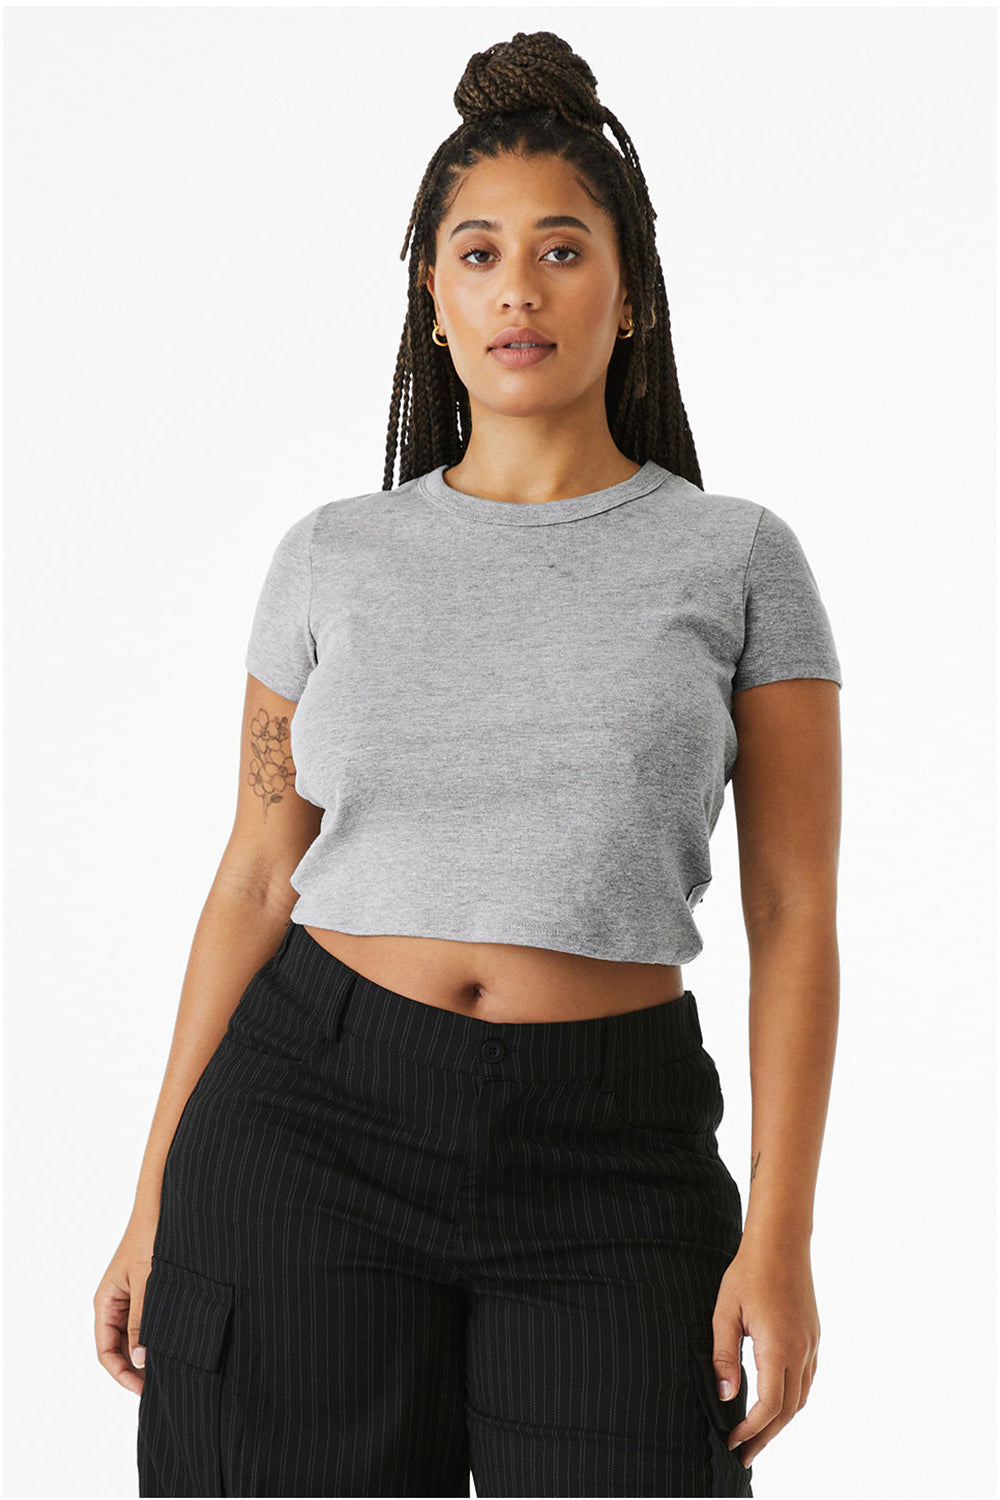 Bella + Canvas 1010BE Womens Micro Ribbed Short Sleeve Crewneck Baby T-Shirt Heather Grey Model Front